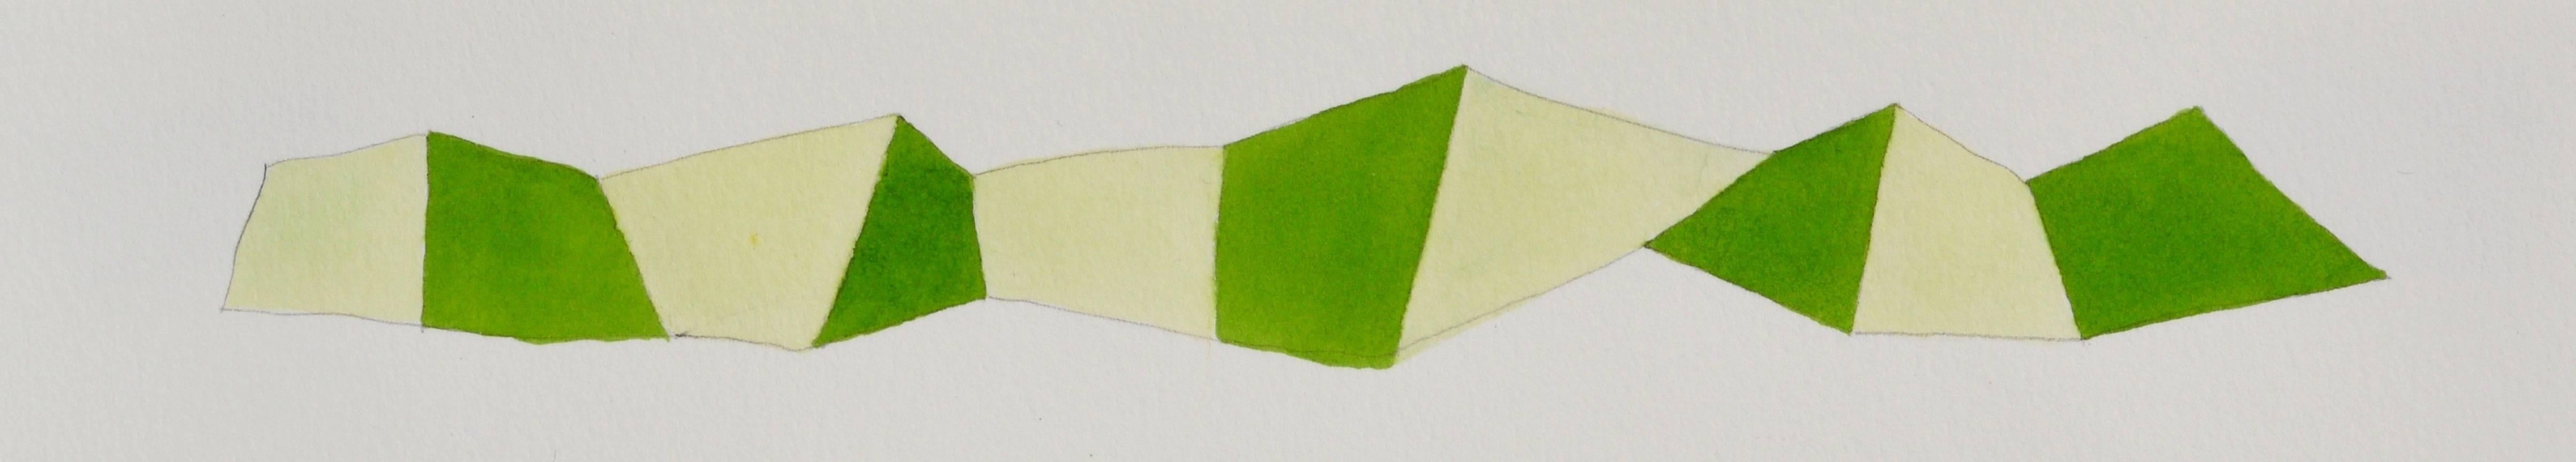 Karen Schiff, Word Snake, 2014, Watercolor, Rag Paper, Graphite